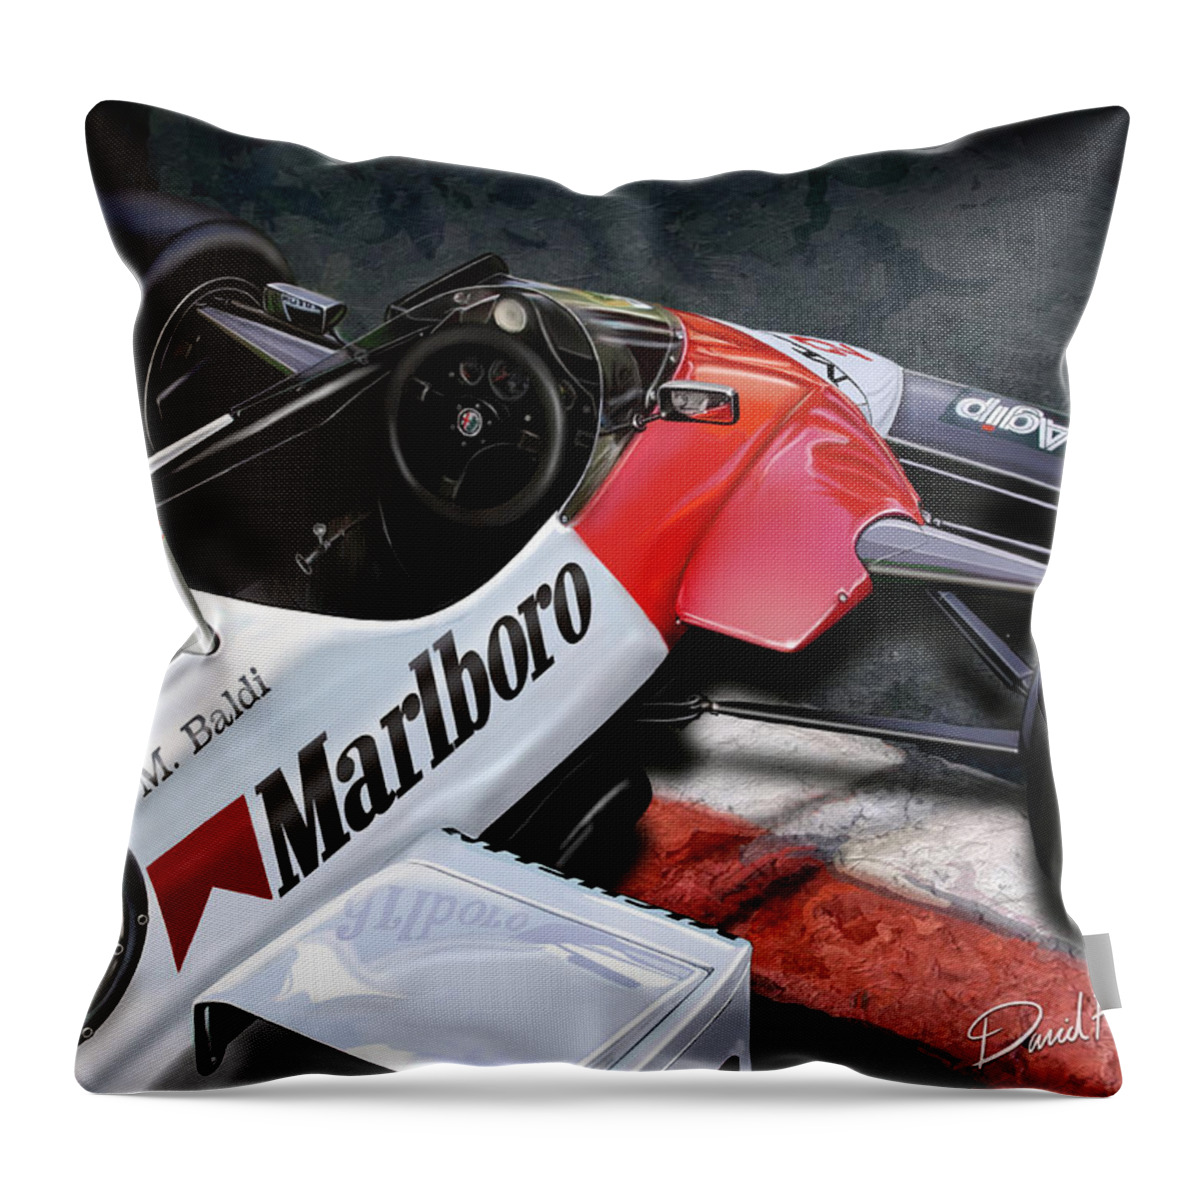 Formula One Throw Pillow featuring the digital art Formula One Car by David Kyte